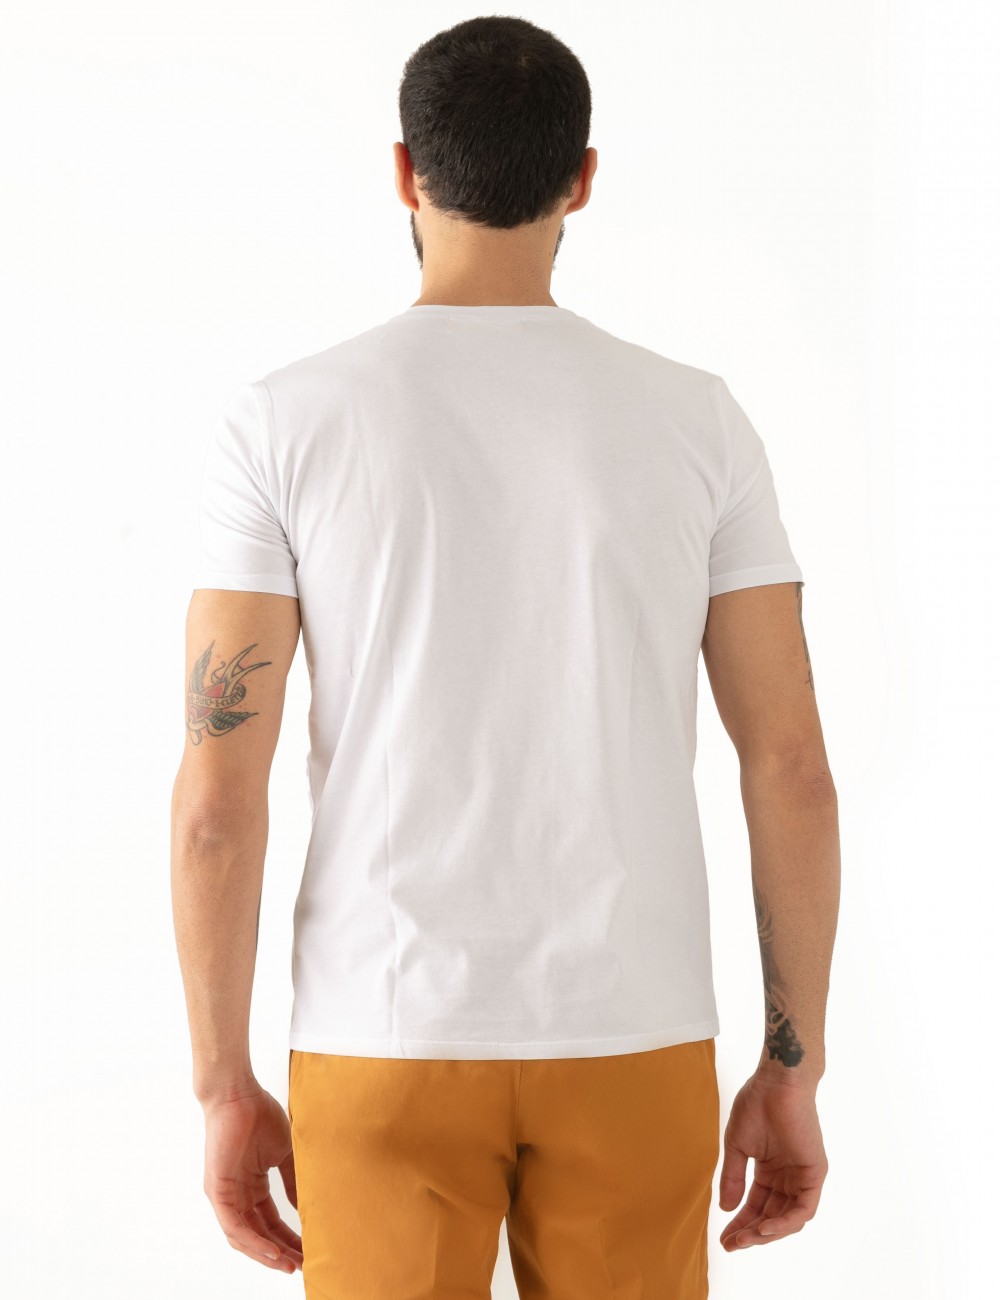 T-shirt "CARL" bianca stampa Cannes in mussola di cotone indossata dettaglio retro